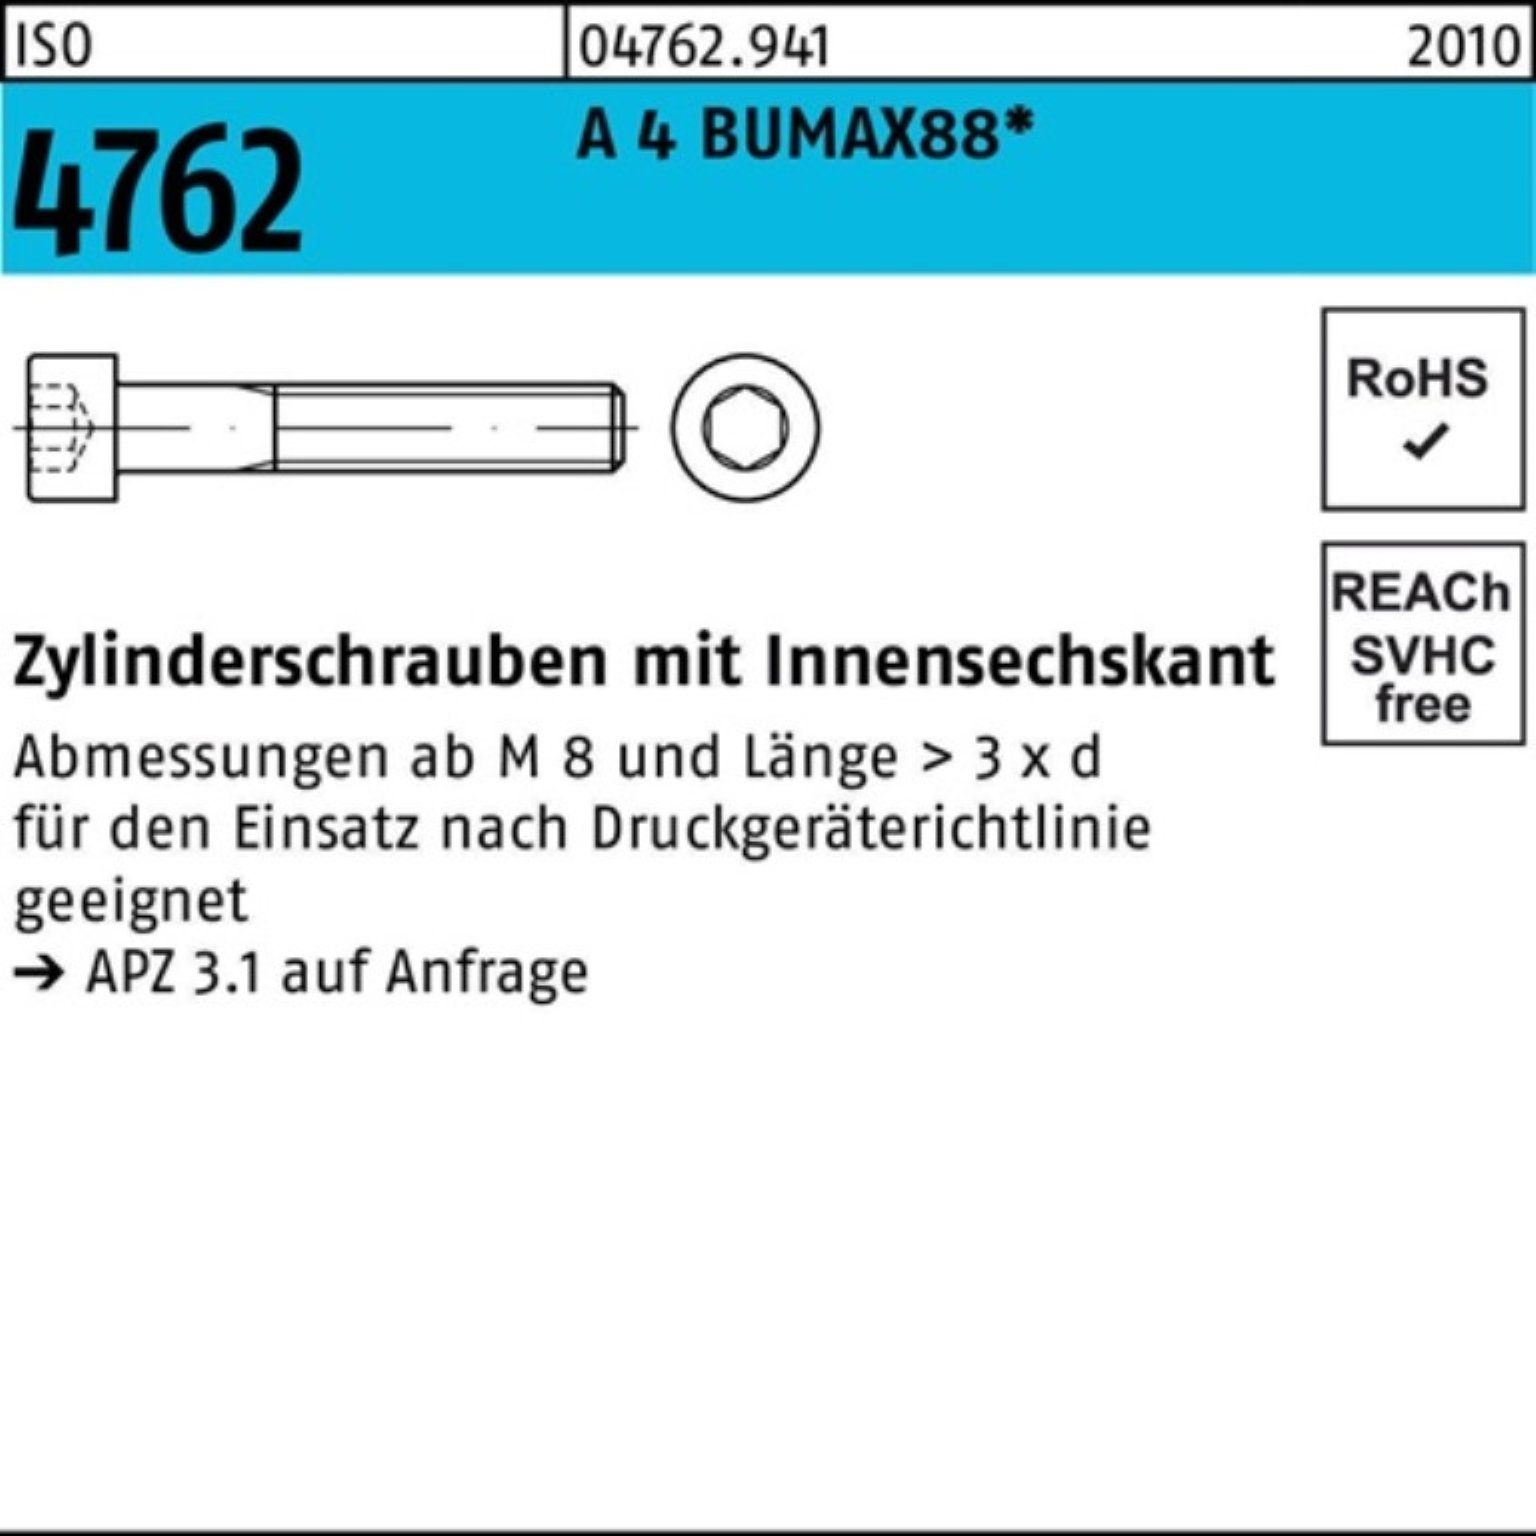 M16x BUMAX88 Pack 25 40 Bufab A 4762 4 Zylinderschraube 100er ISO Zylinderschraube Innen-6kt